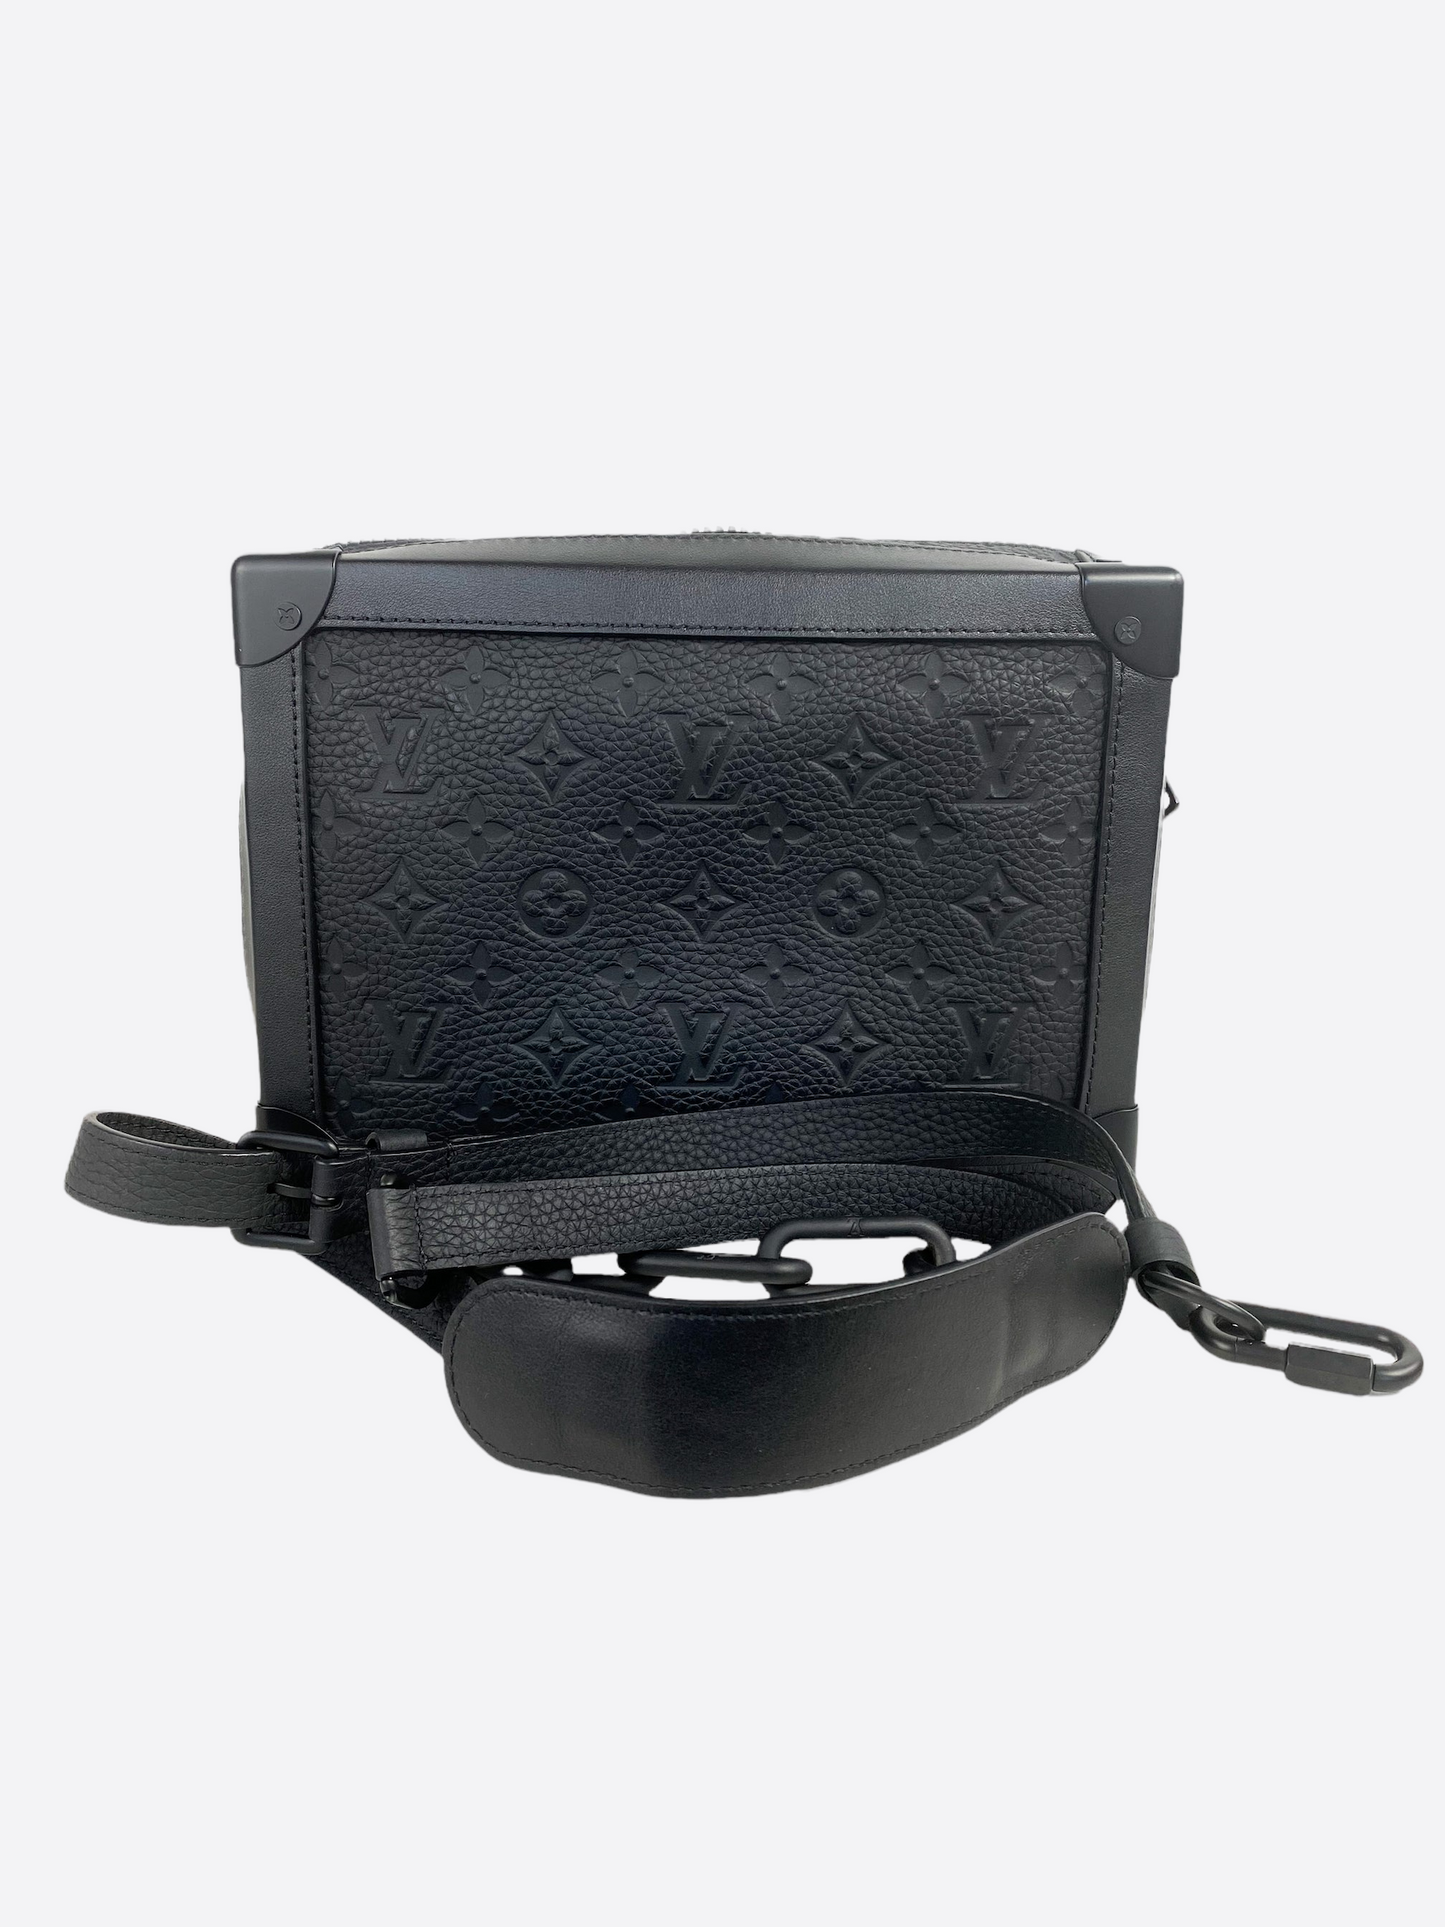 Louis Vuitton Mini Soft Trunk Black Taurillon